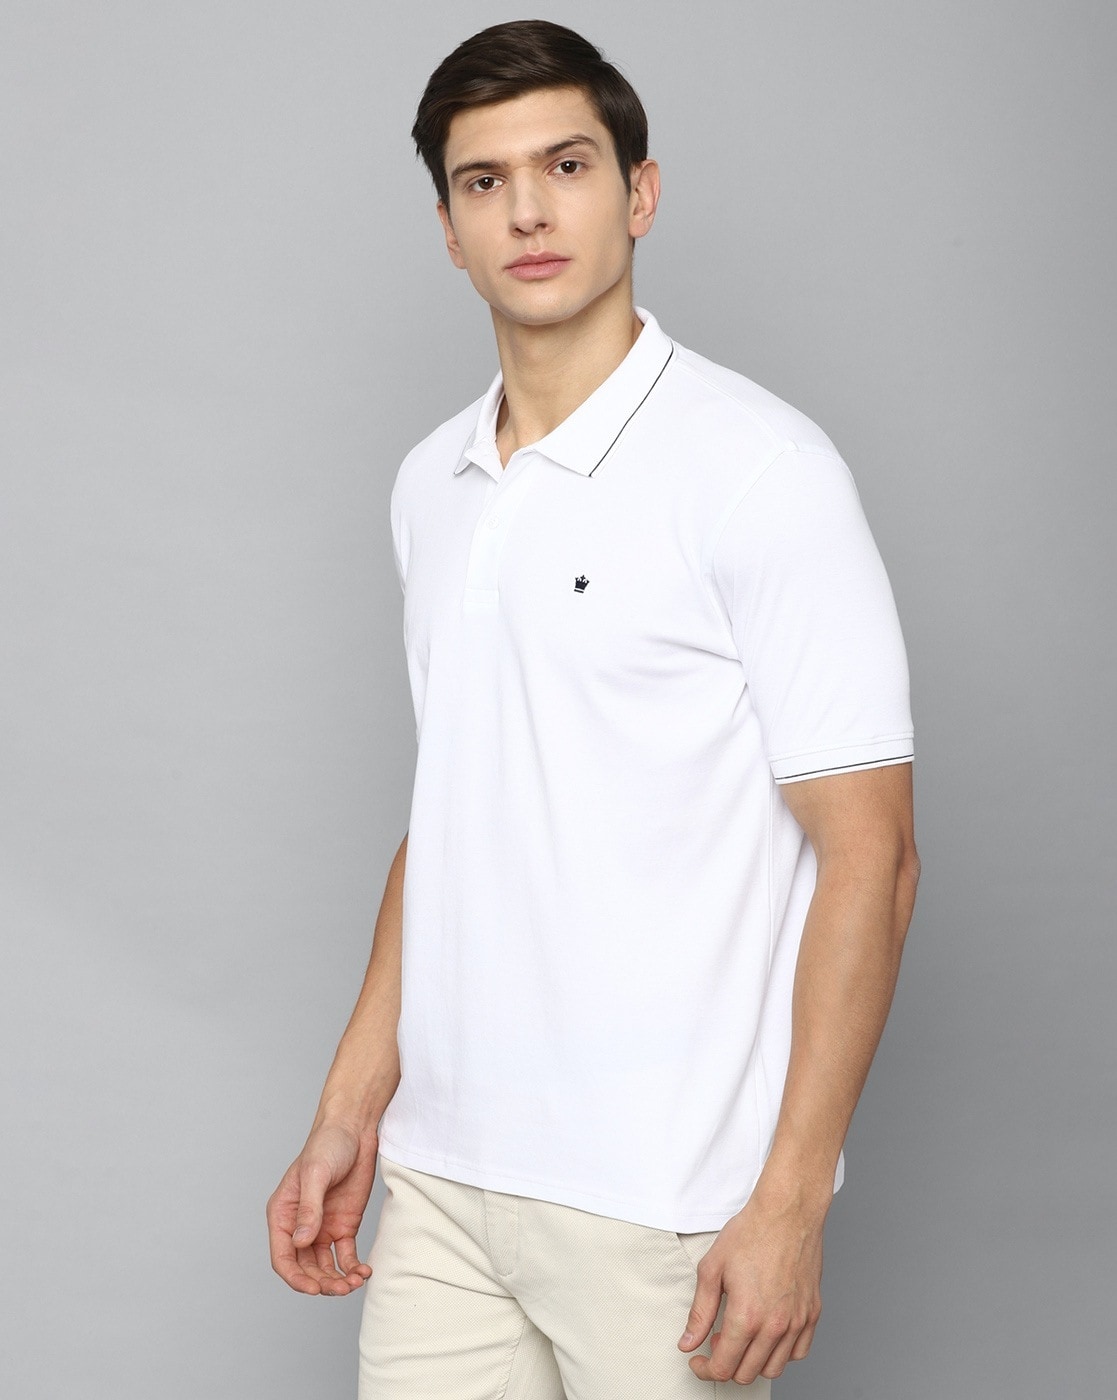 LOUIS PHILIPPE Solid Men Polo Neck White T-Shirt - Buy LOUIS